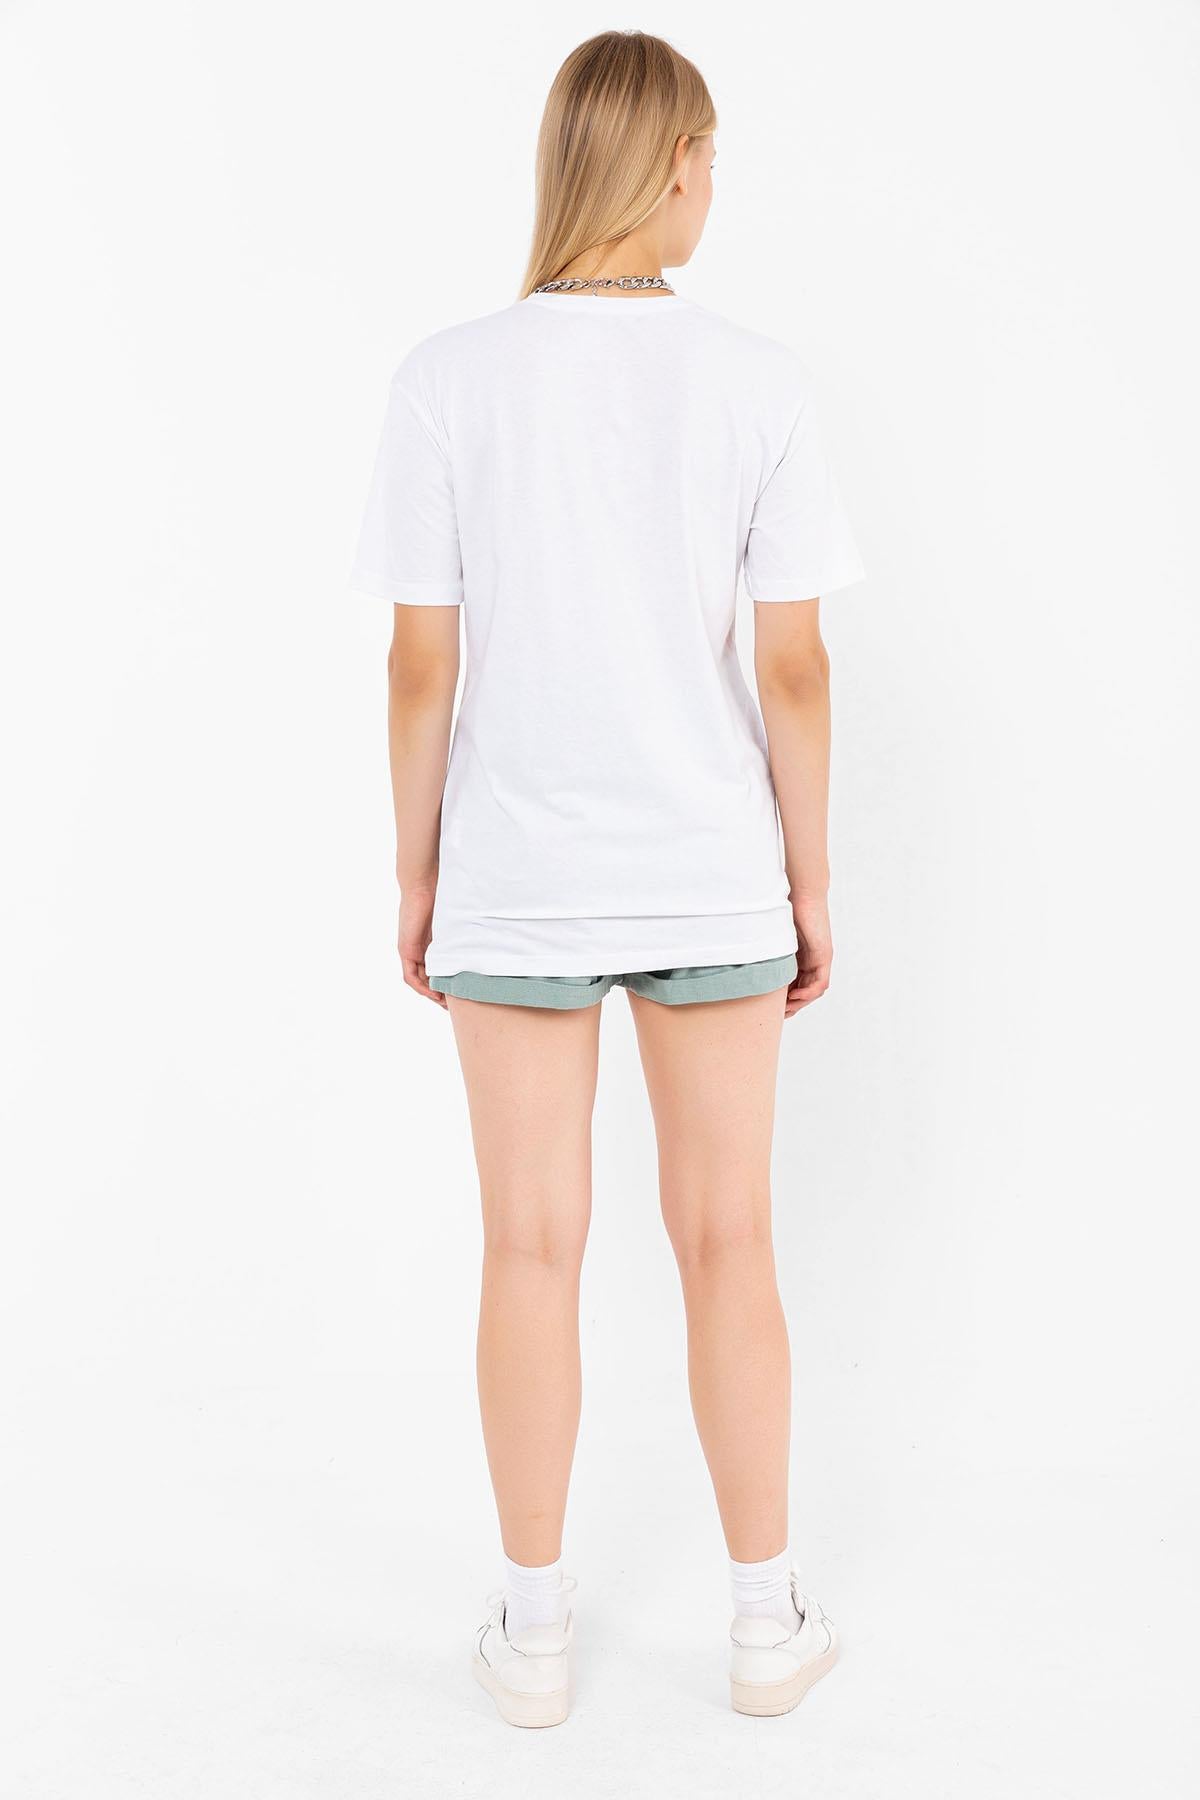 Crew Neck San Diego Printed White Oversize Woman Unisex T -shirt